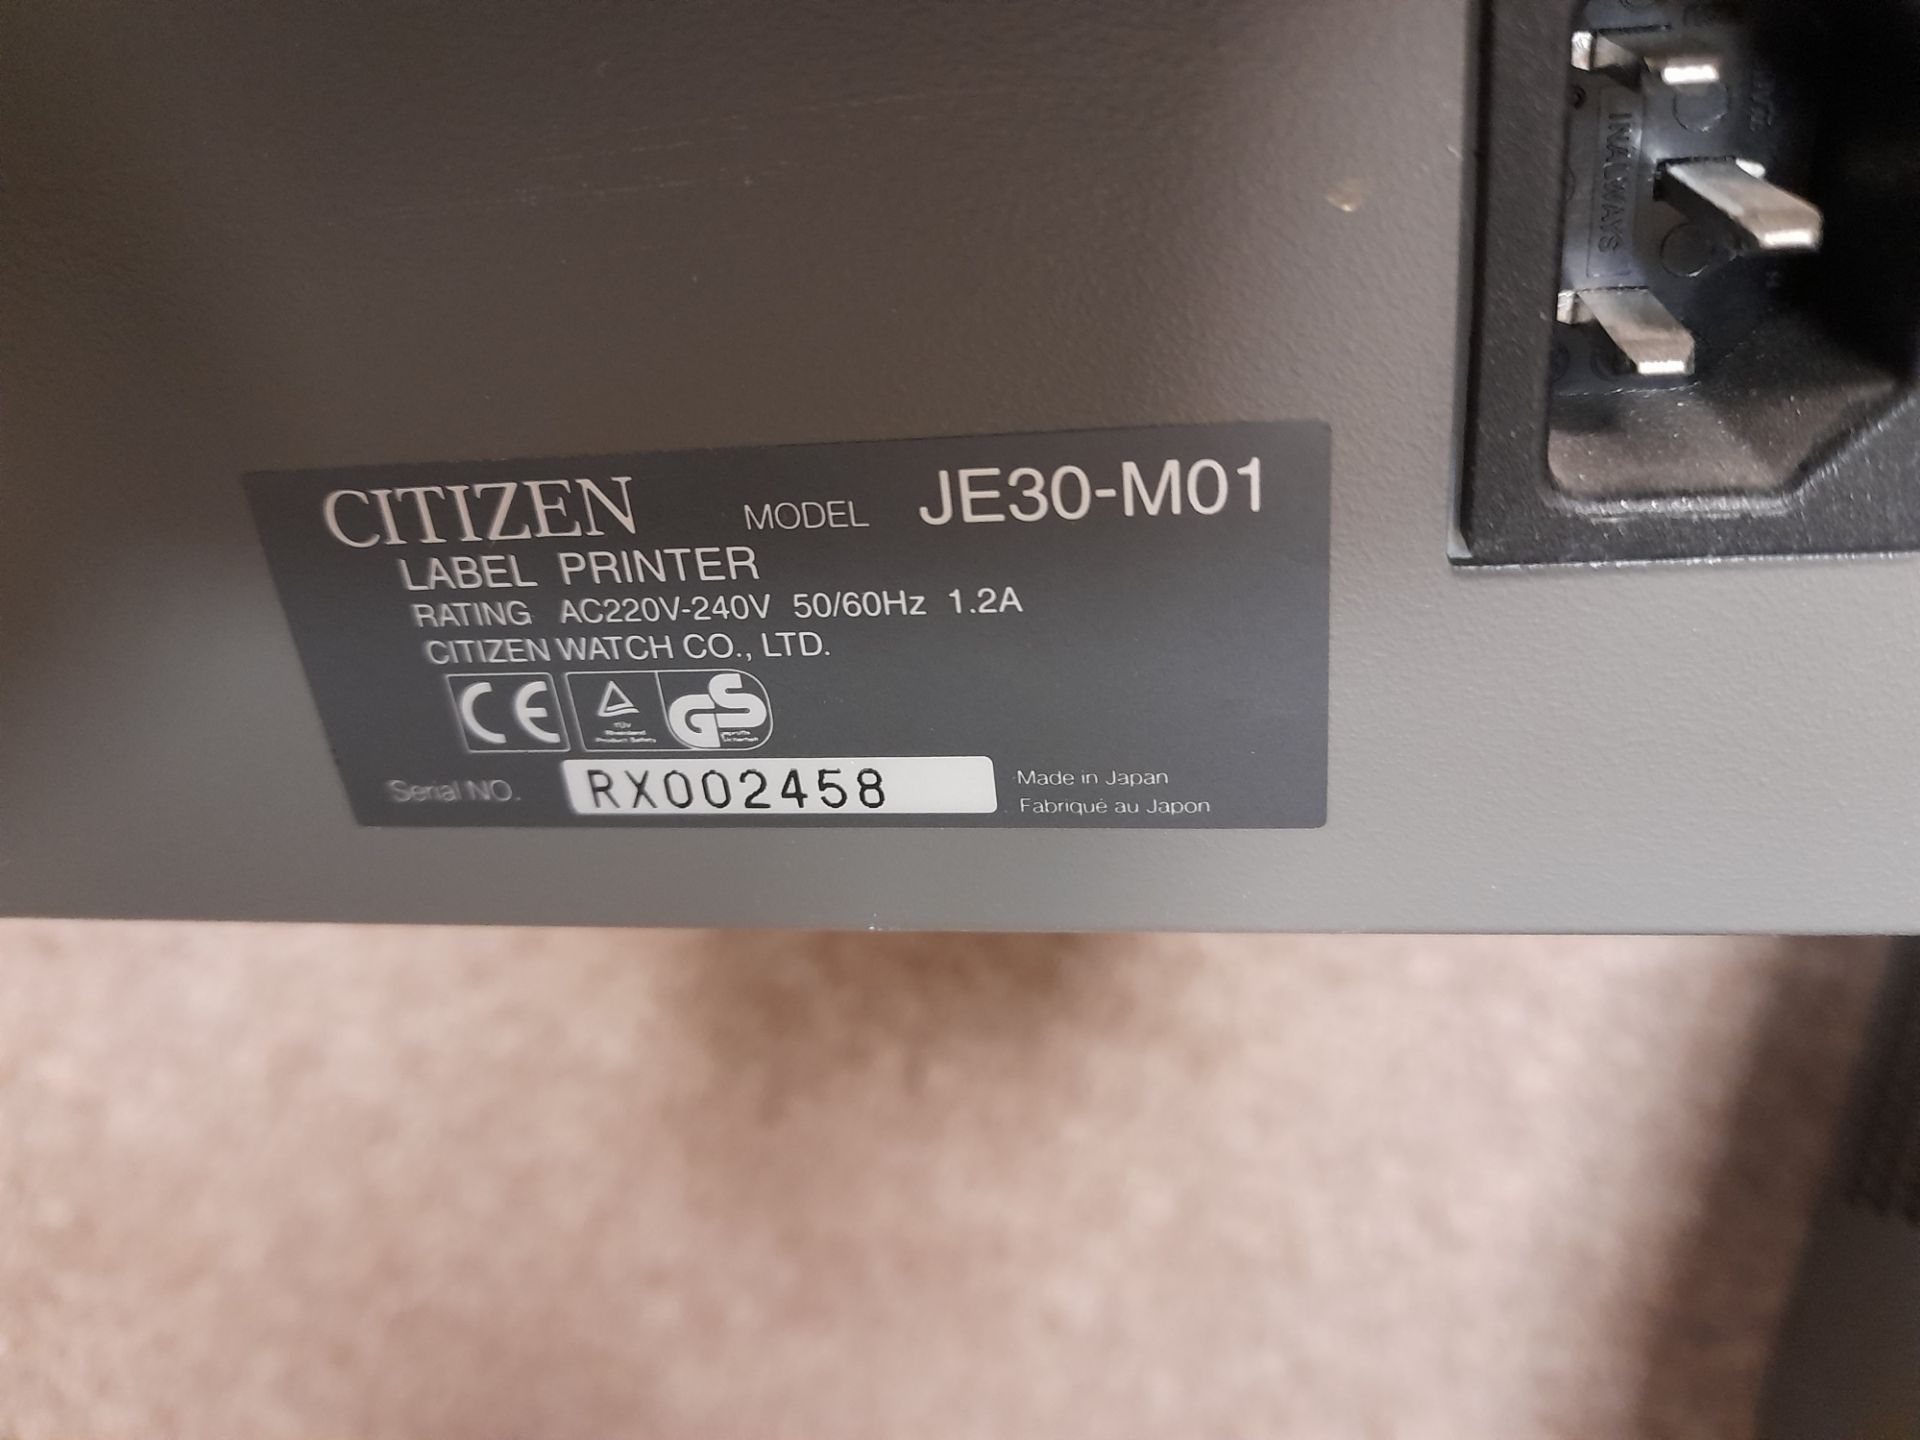 Citizen CLP-7202e / JE30-M01 label printer, Serial Number: RX002458 - Image 2 of 2